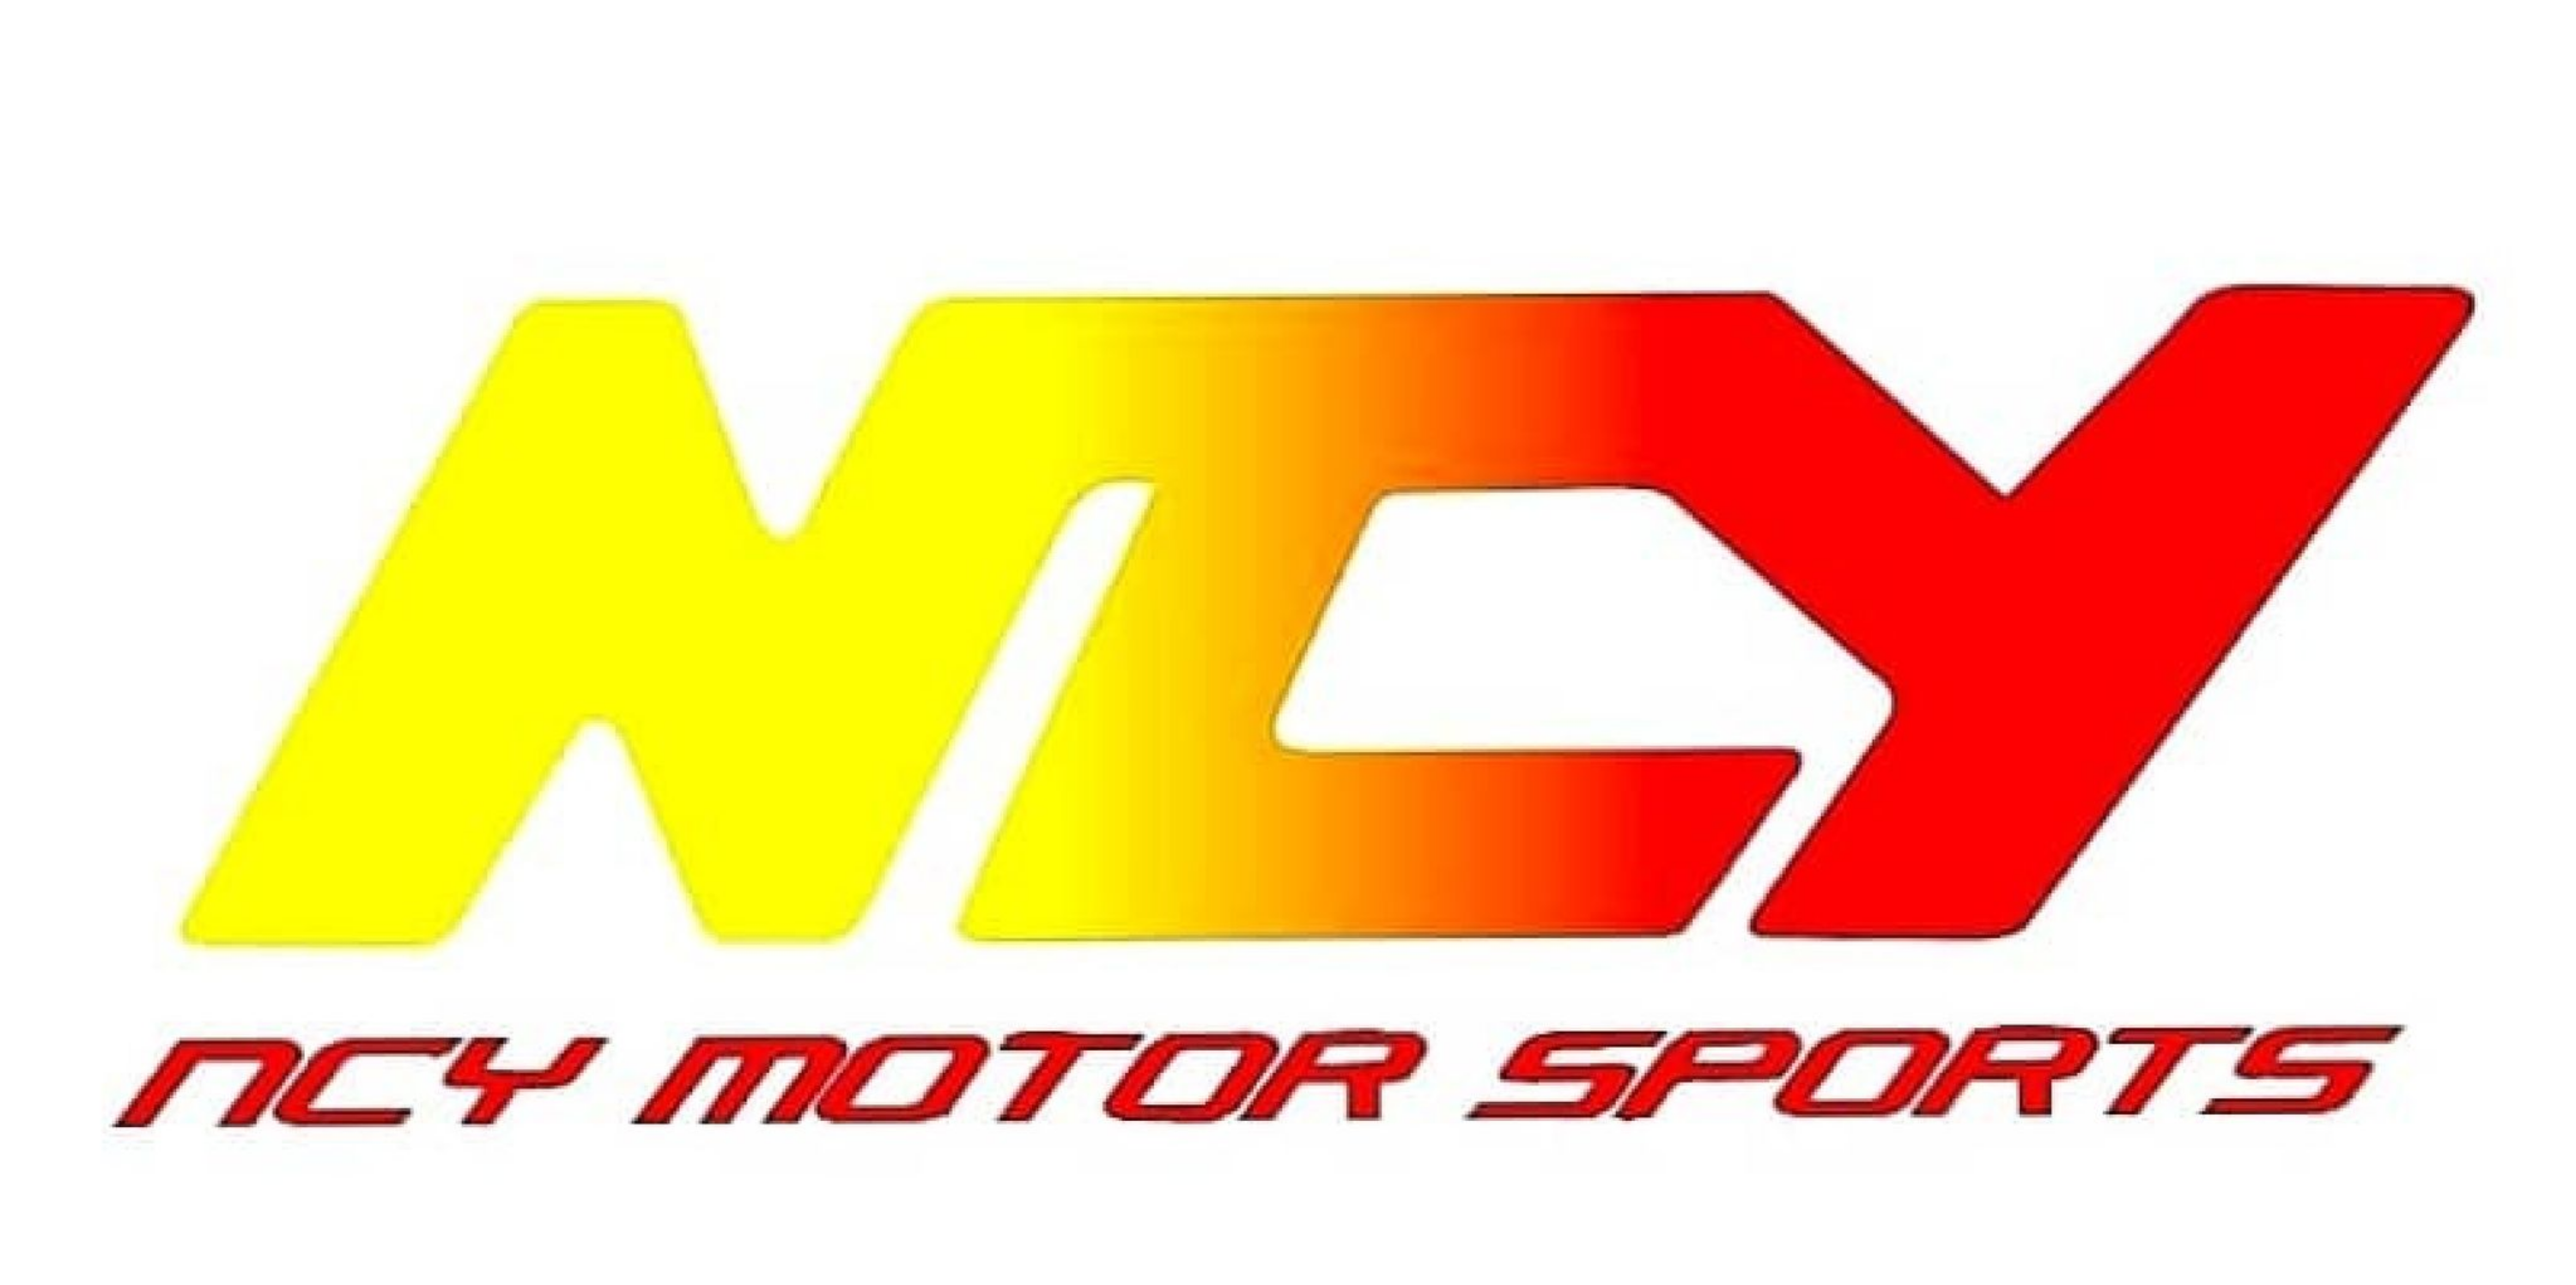 ncy logo